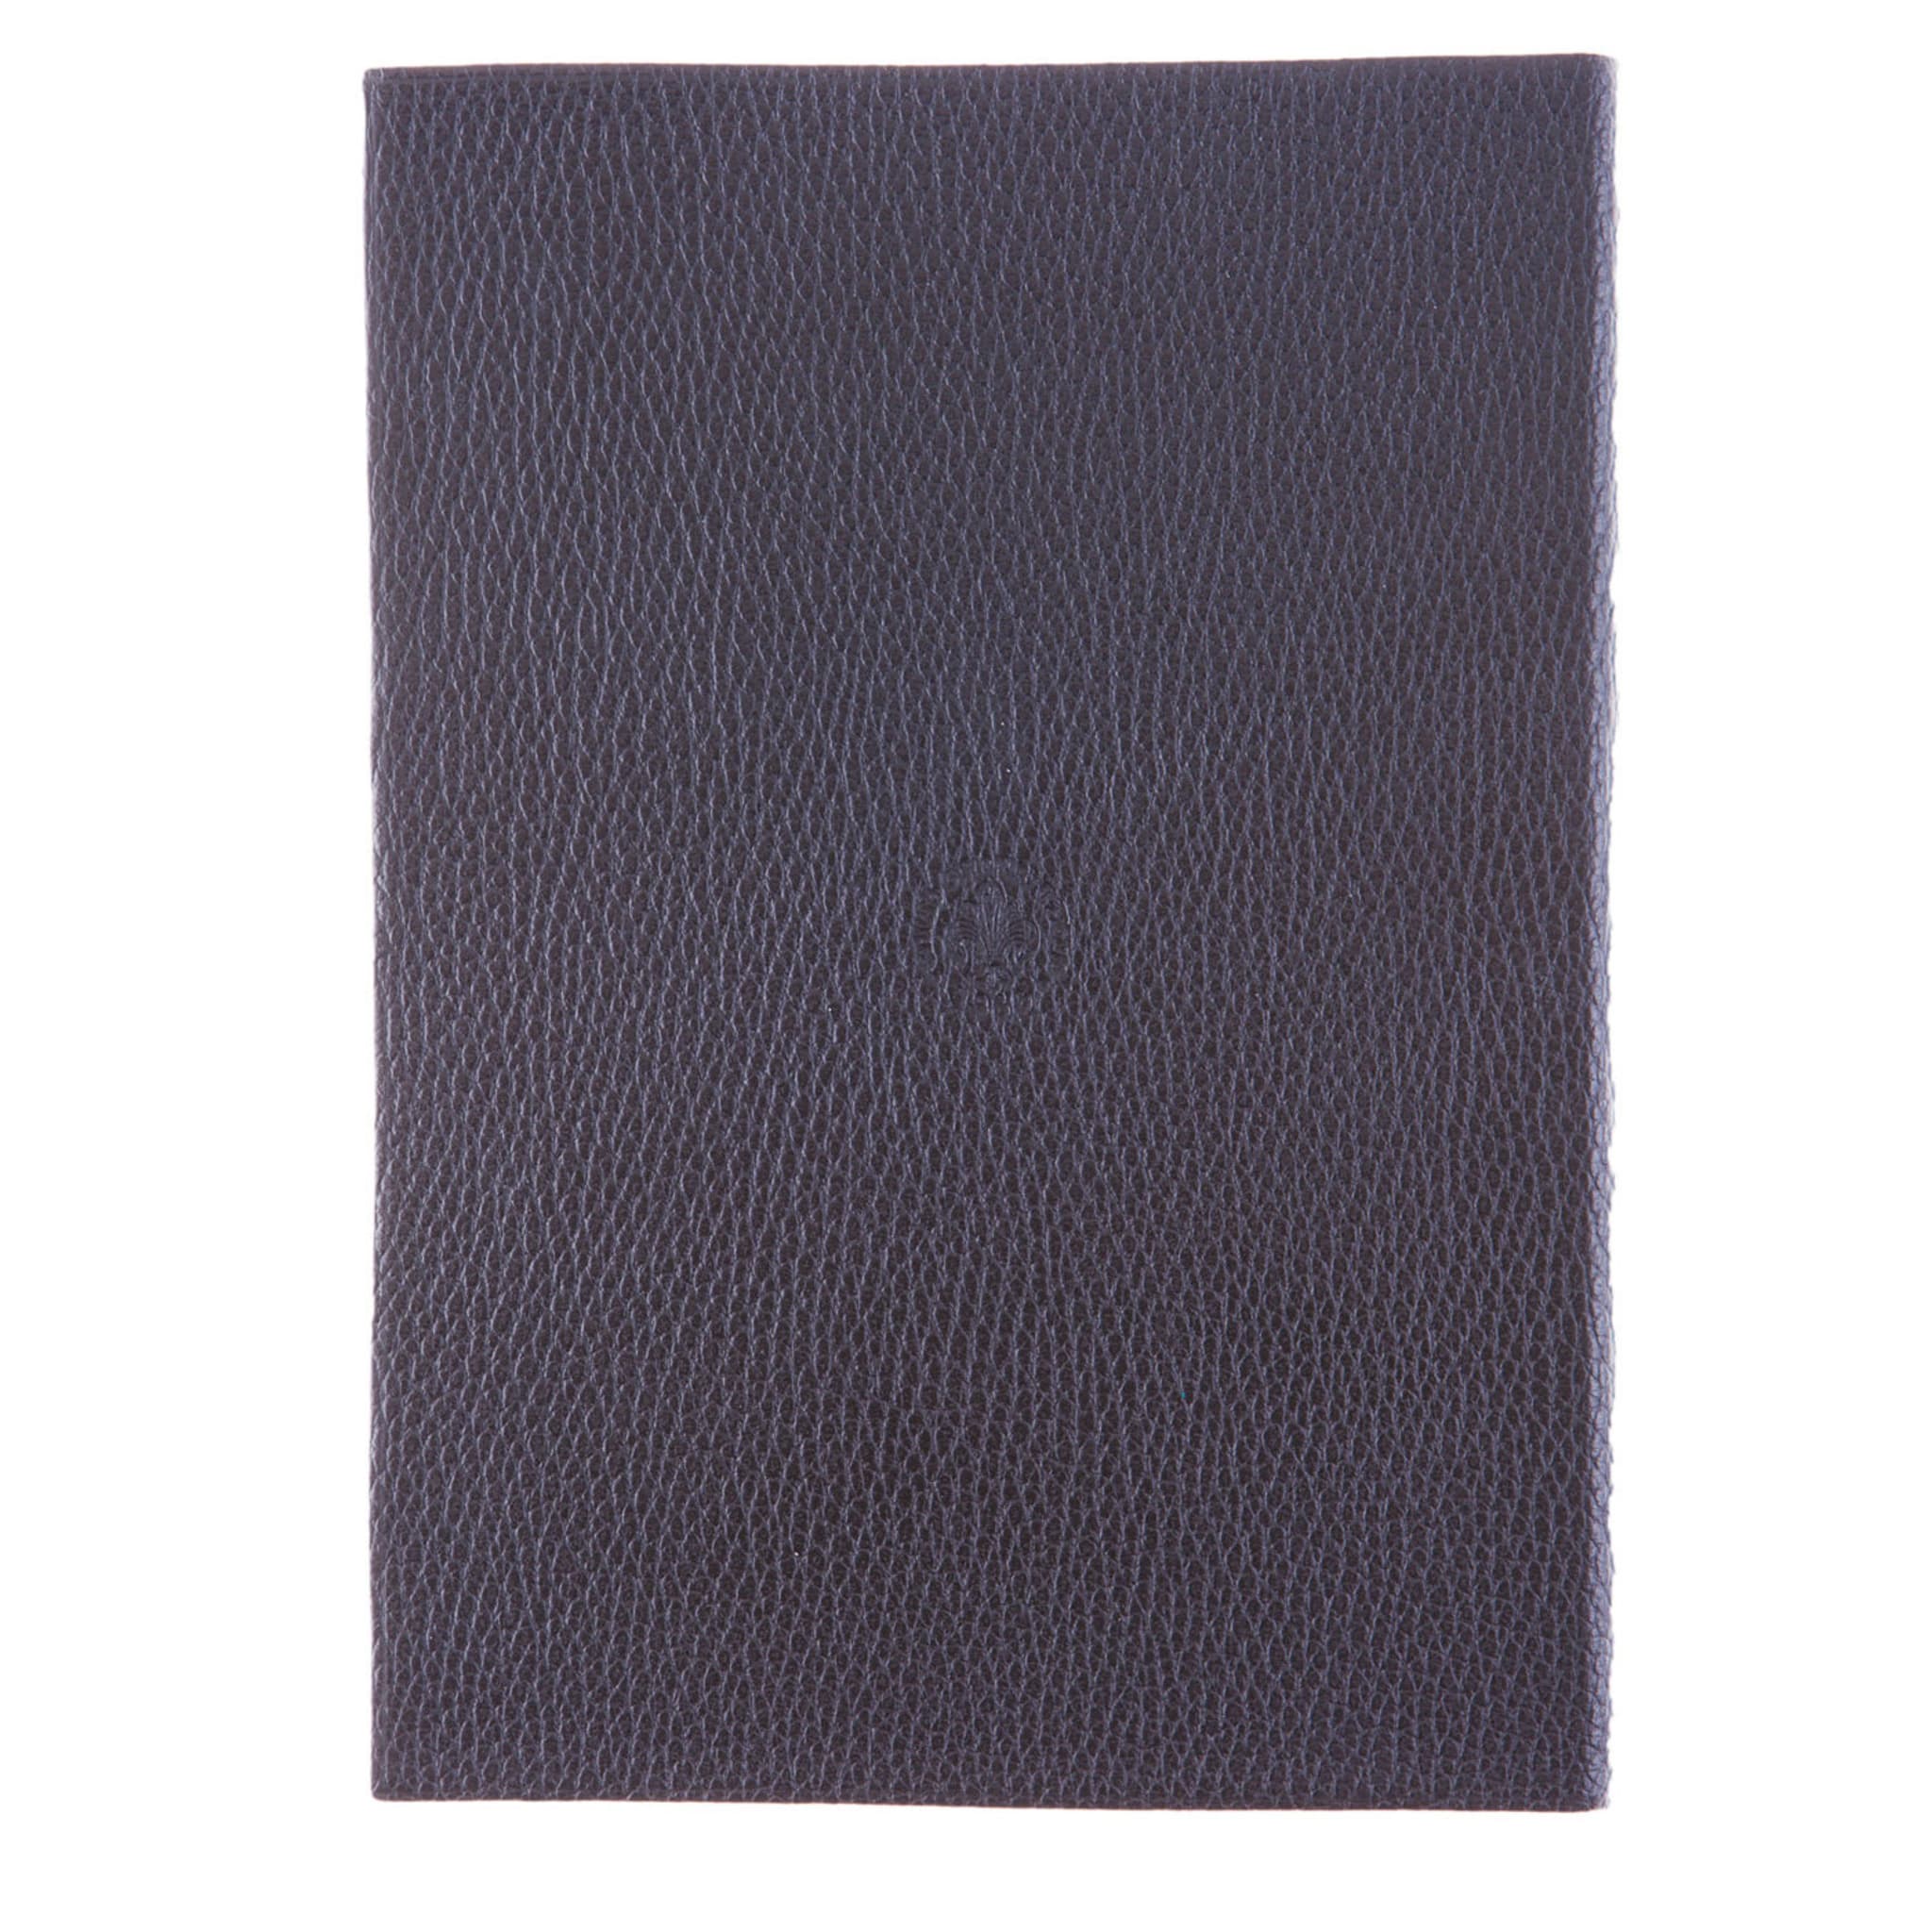 Nero Elegante Leather Notebook - Alternative view 3